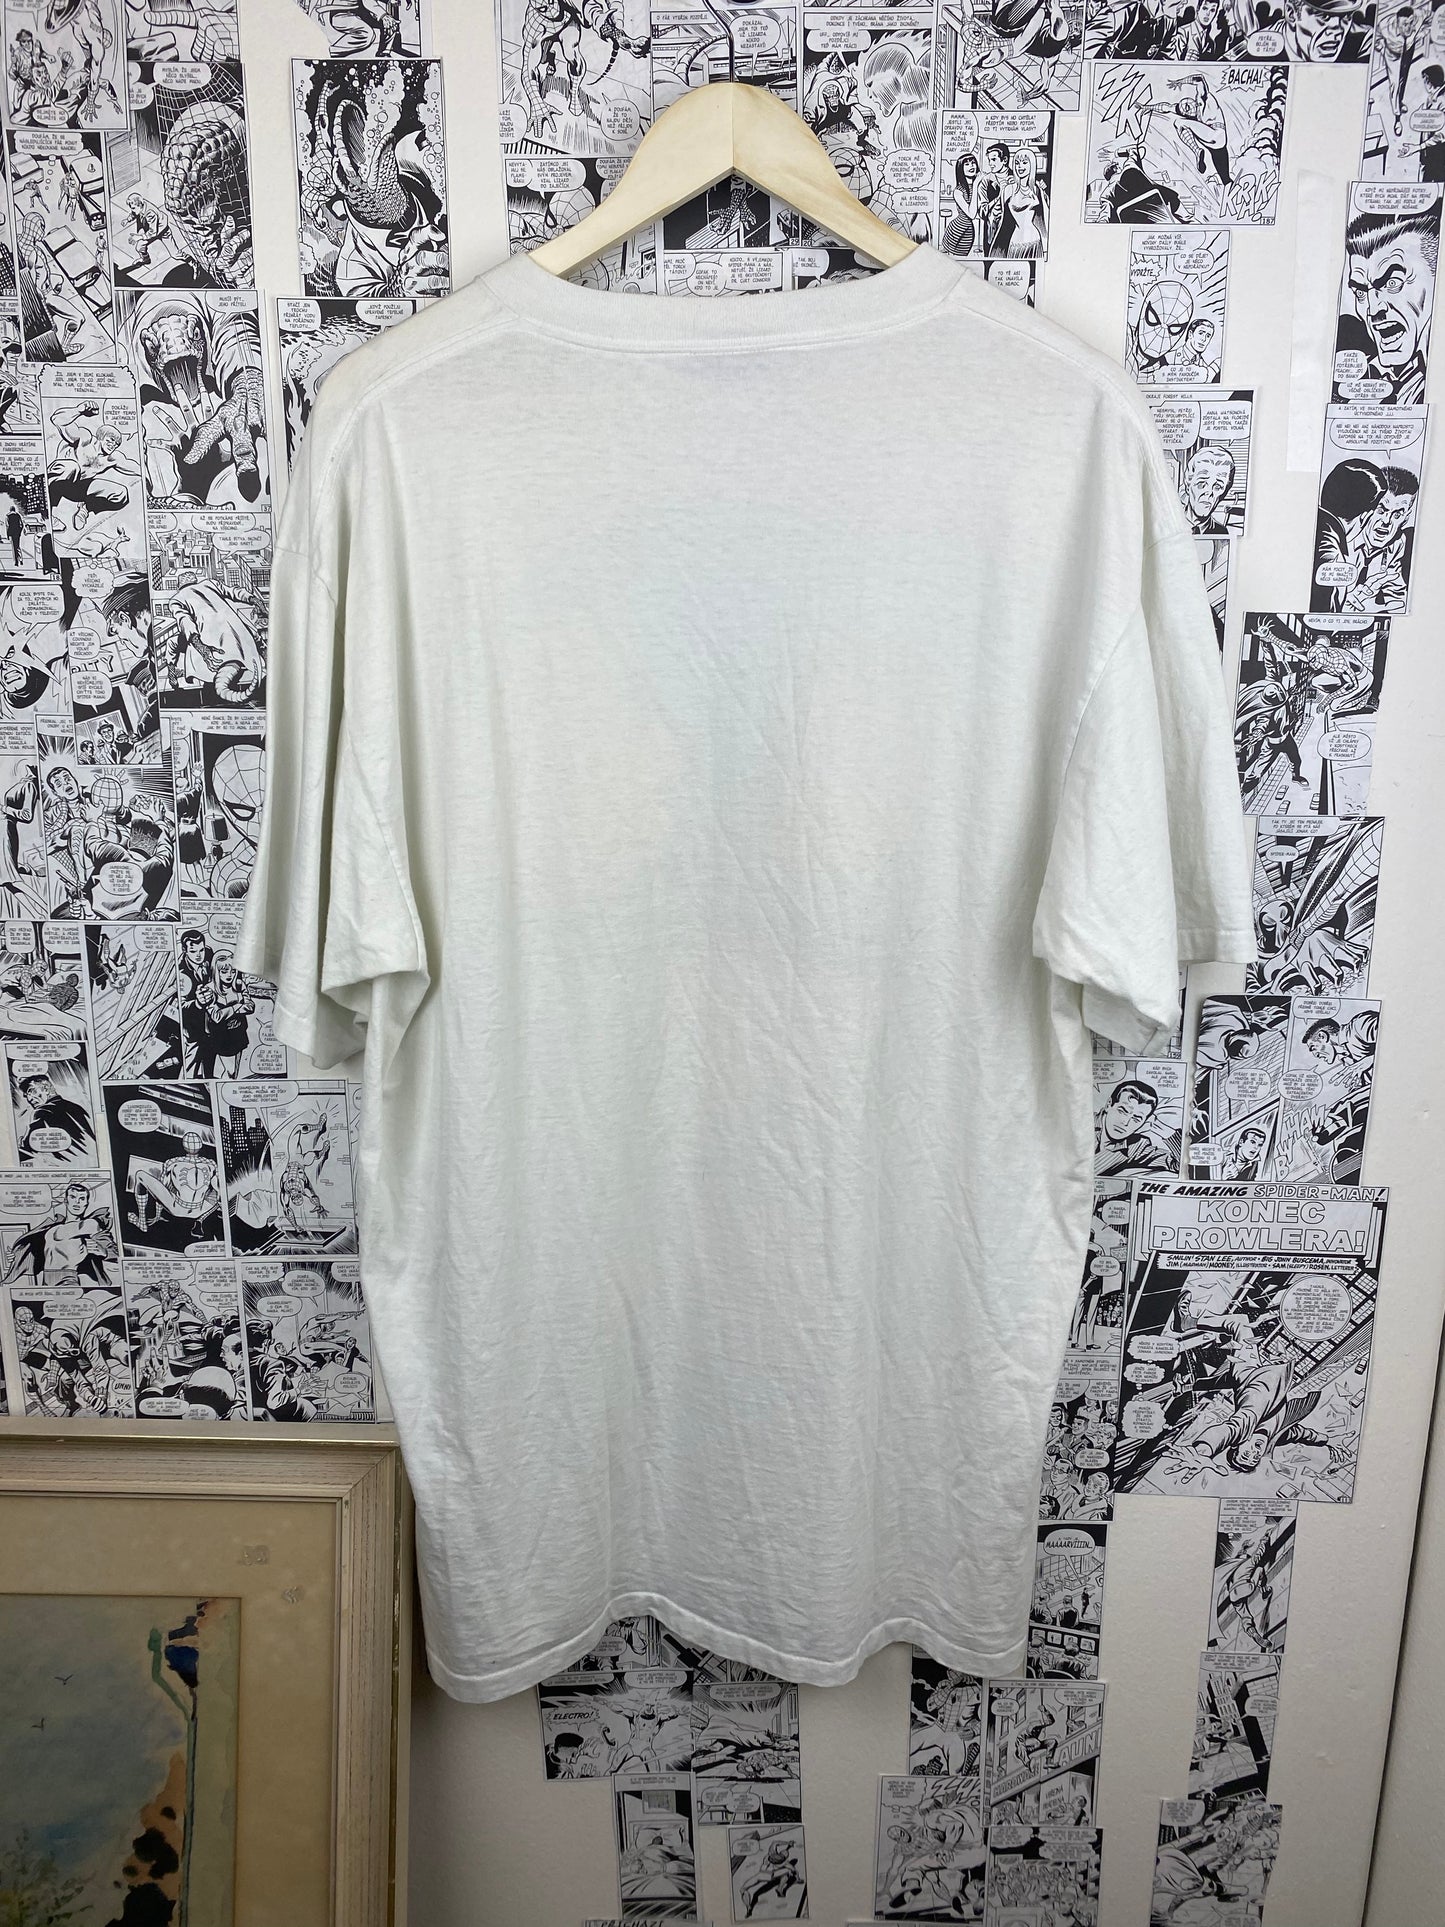 Vintage “Technology - Dilbert” 90s t-shirt - size XL